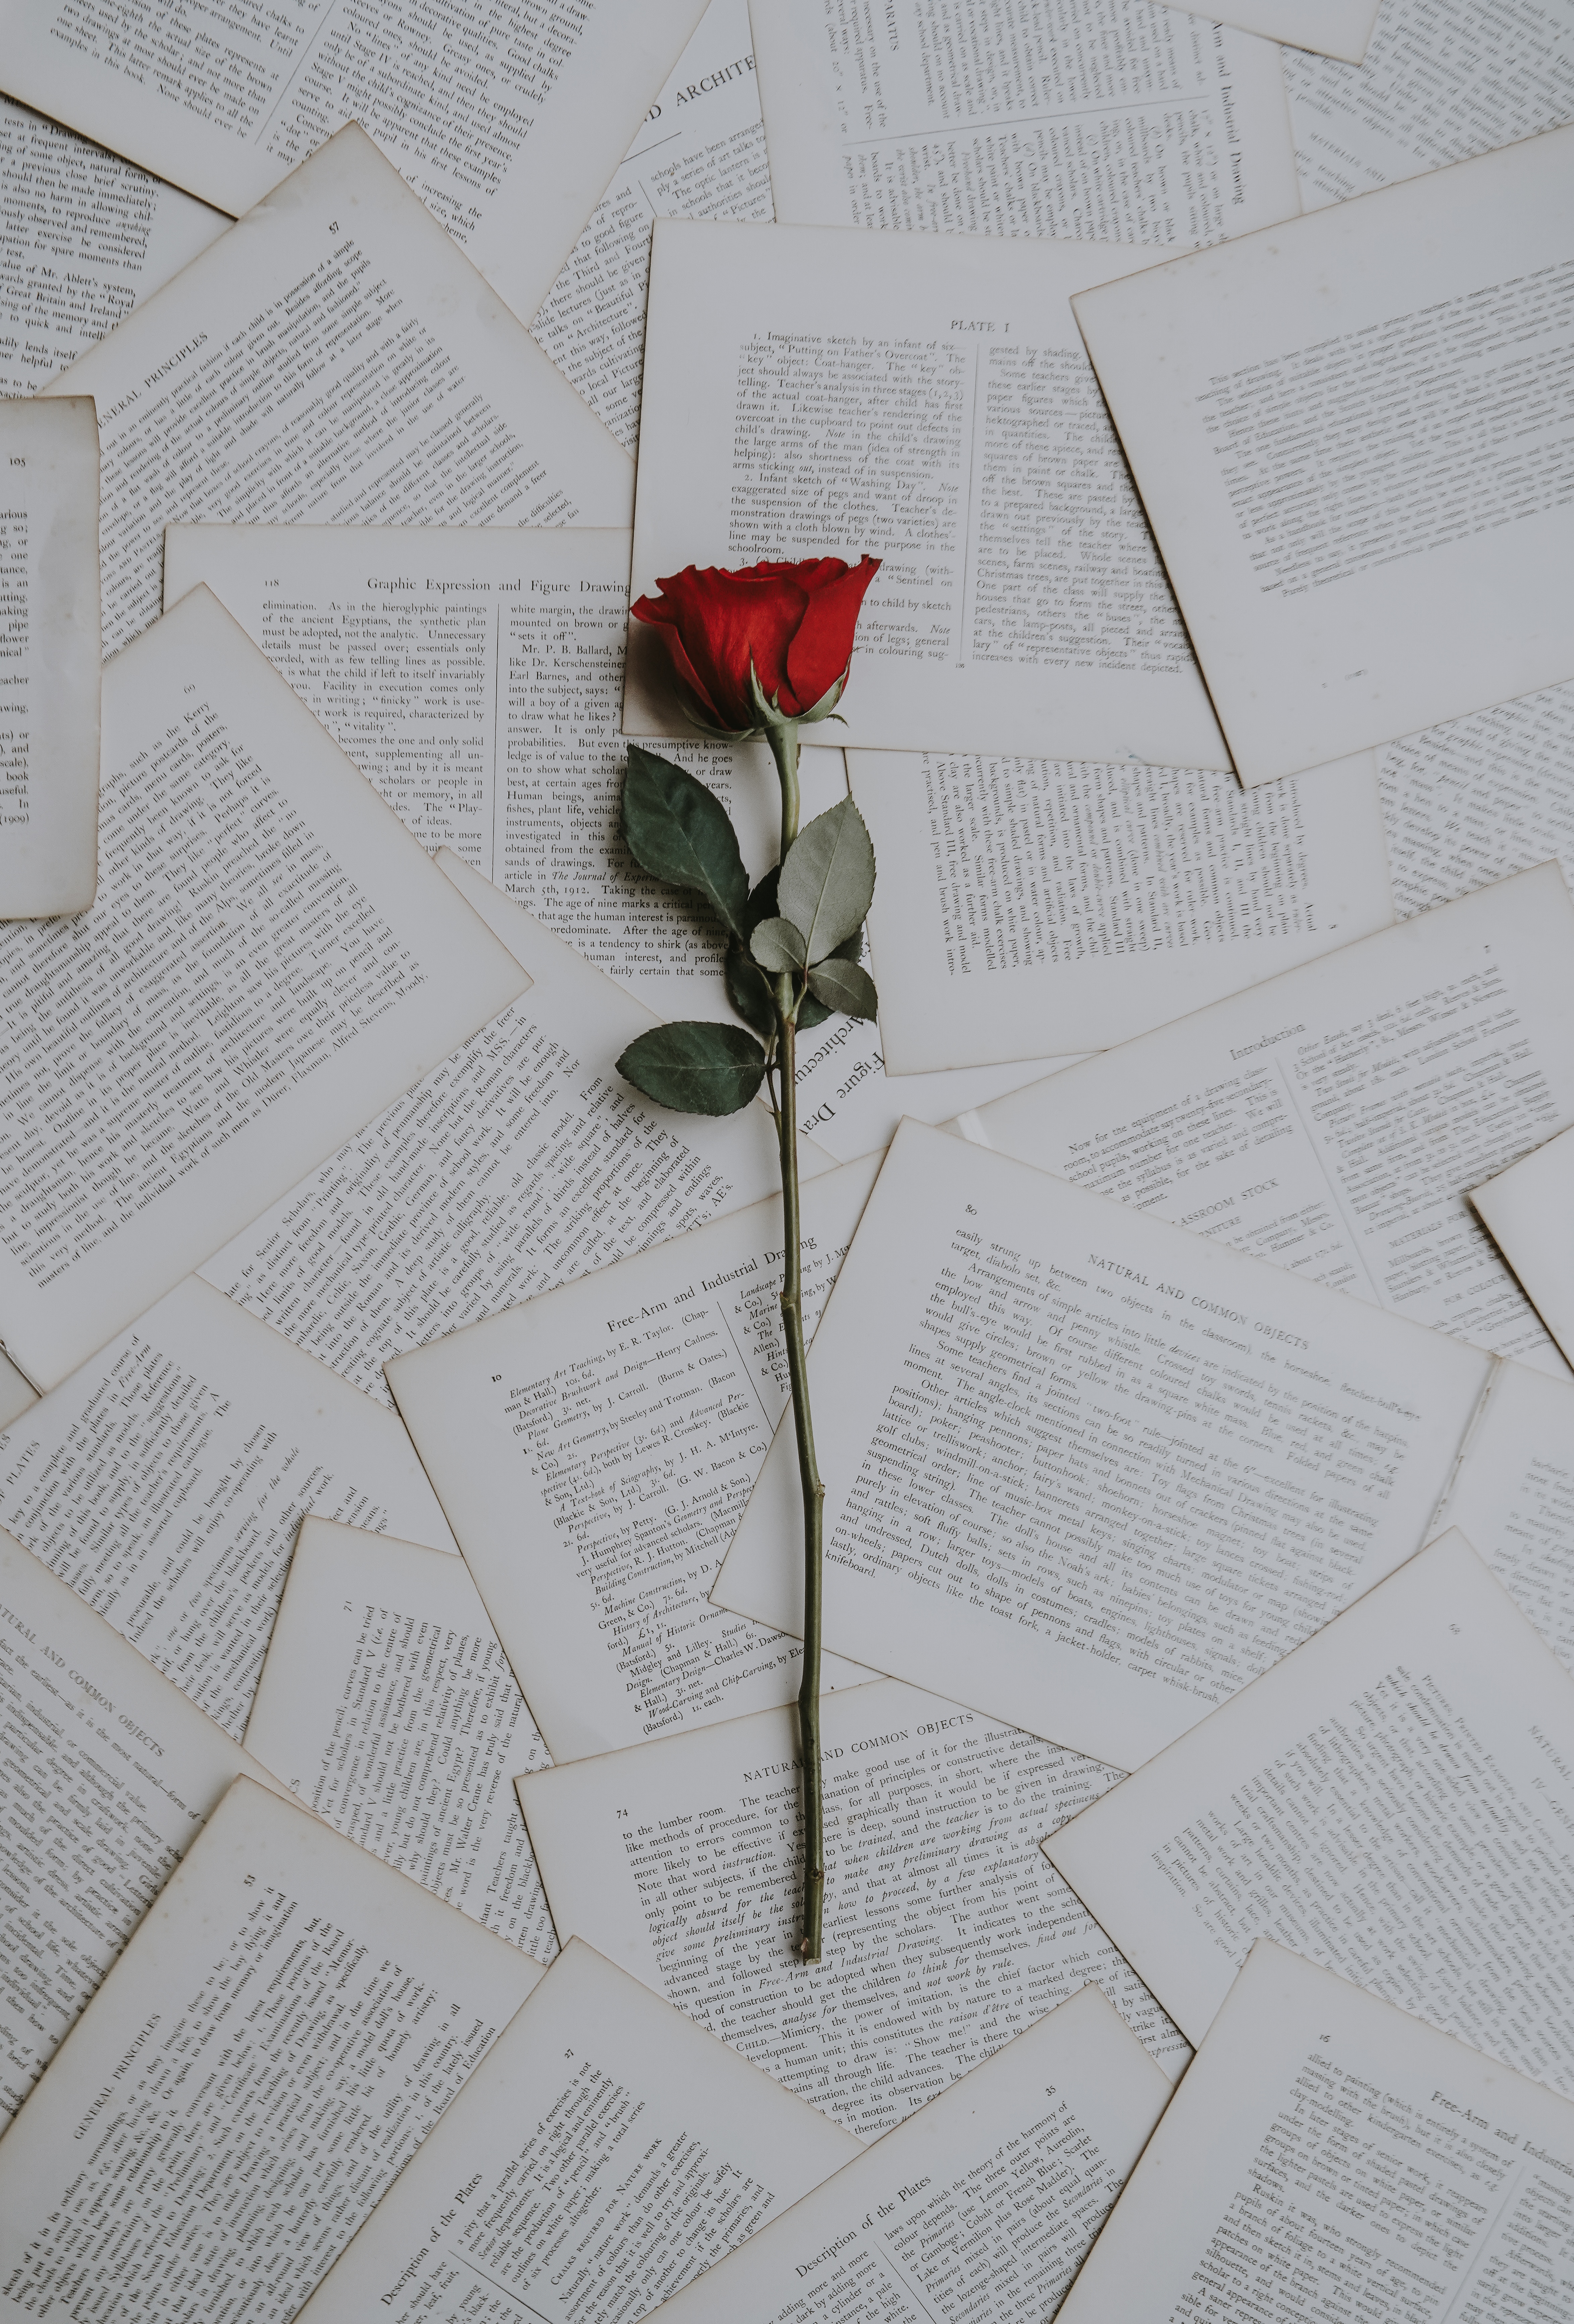 flowers, books, rose flower, rose, texts